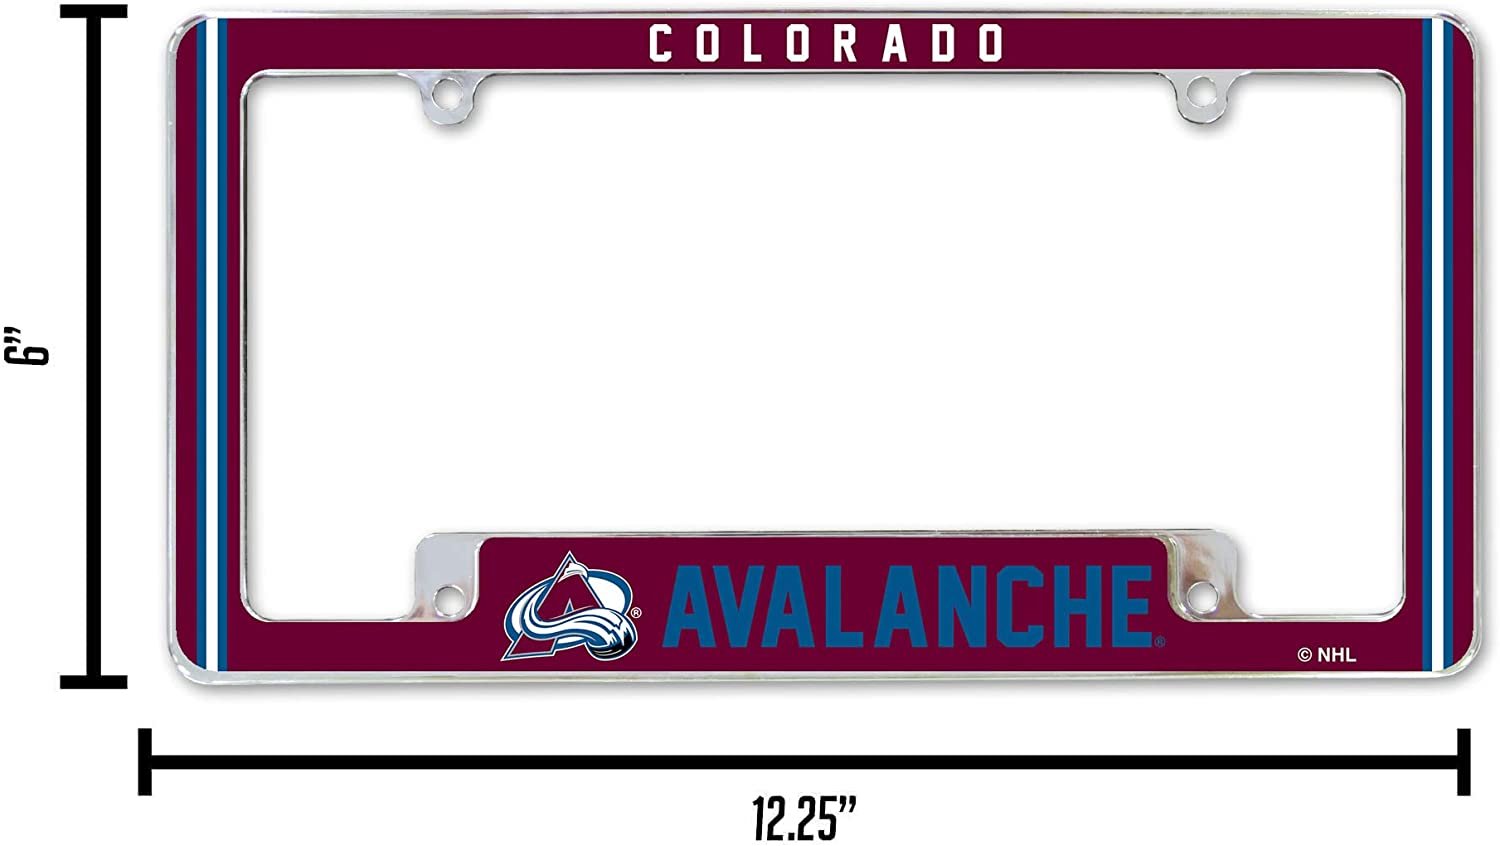 Colorado Avalanche Metal License Plate Frame Chrome Tag Cover Alternate Design 6x12 Inch